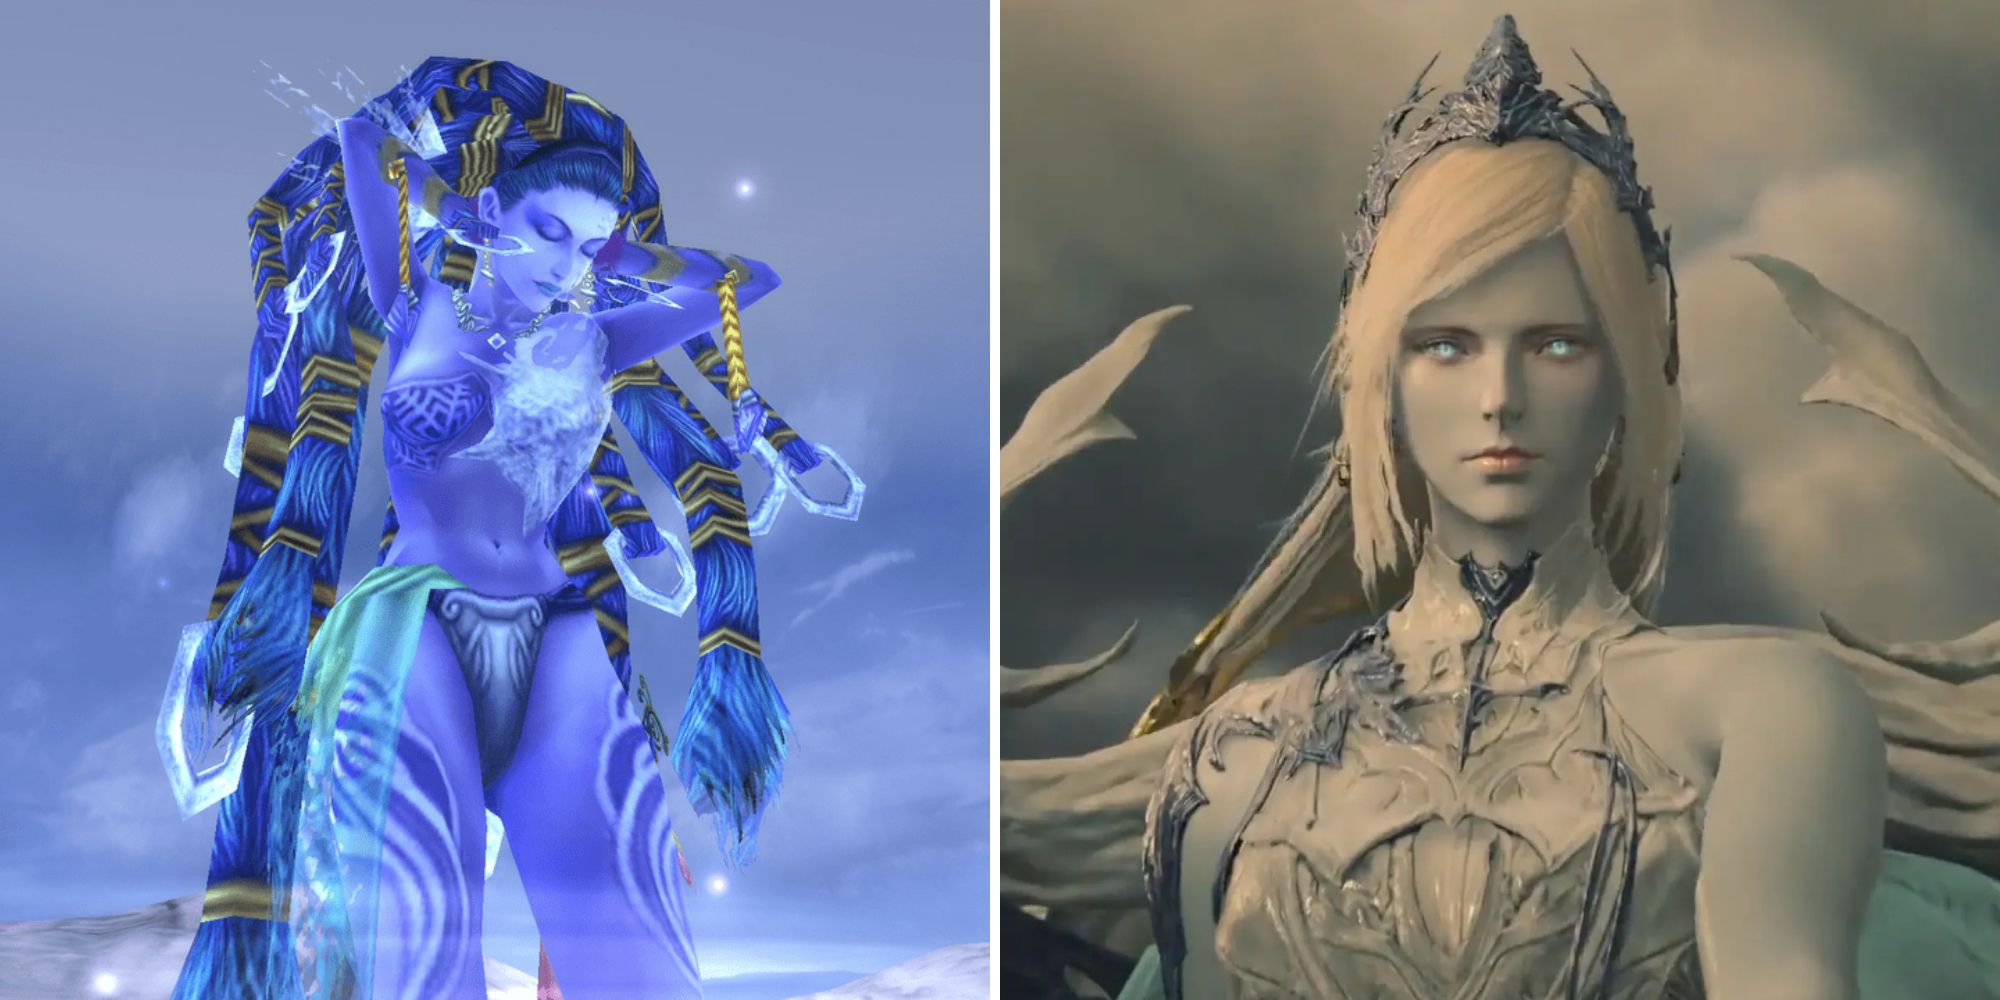 Shiva as she appears in Final Fantasy X and Final Fantasy XVI